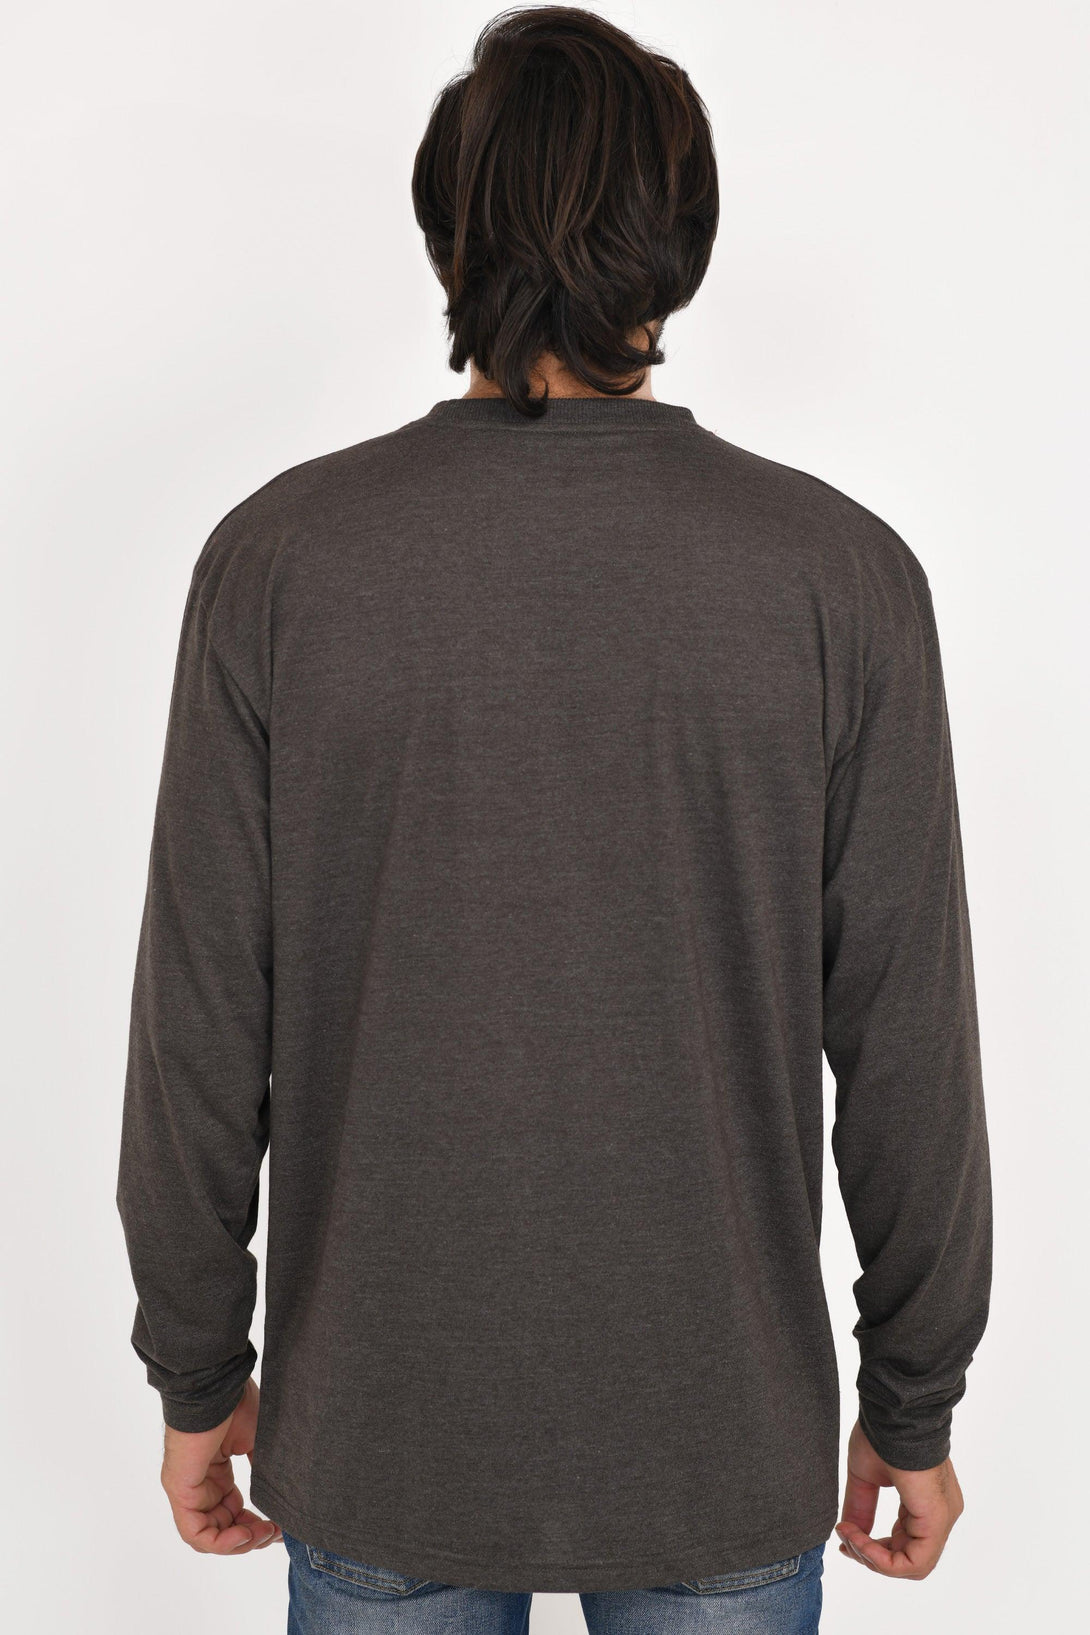 Long & Tall Full Sleeves Shirts | Pack of 3 | Hunter Green - Charcoal - Lagoon - FTS